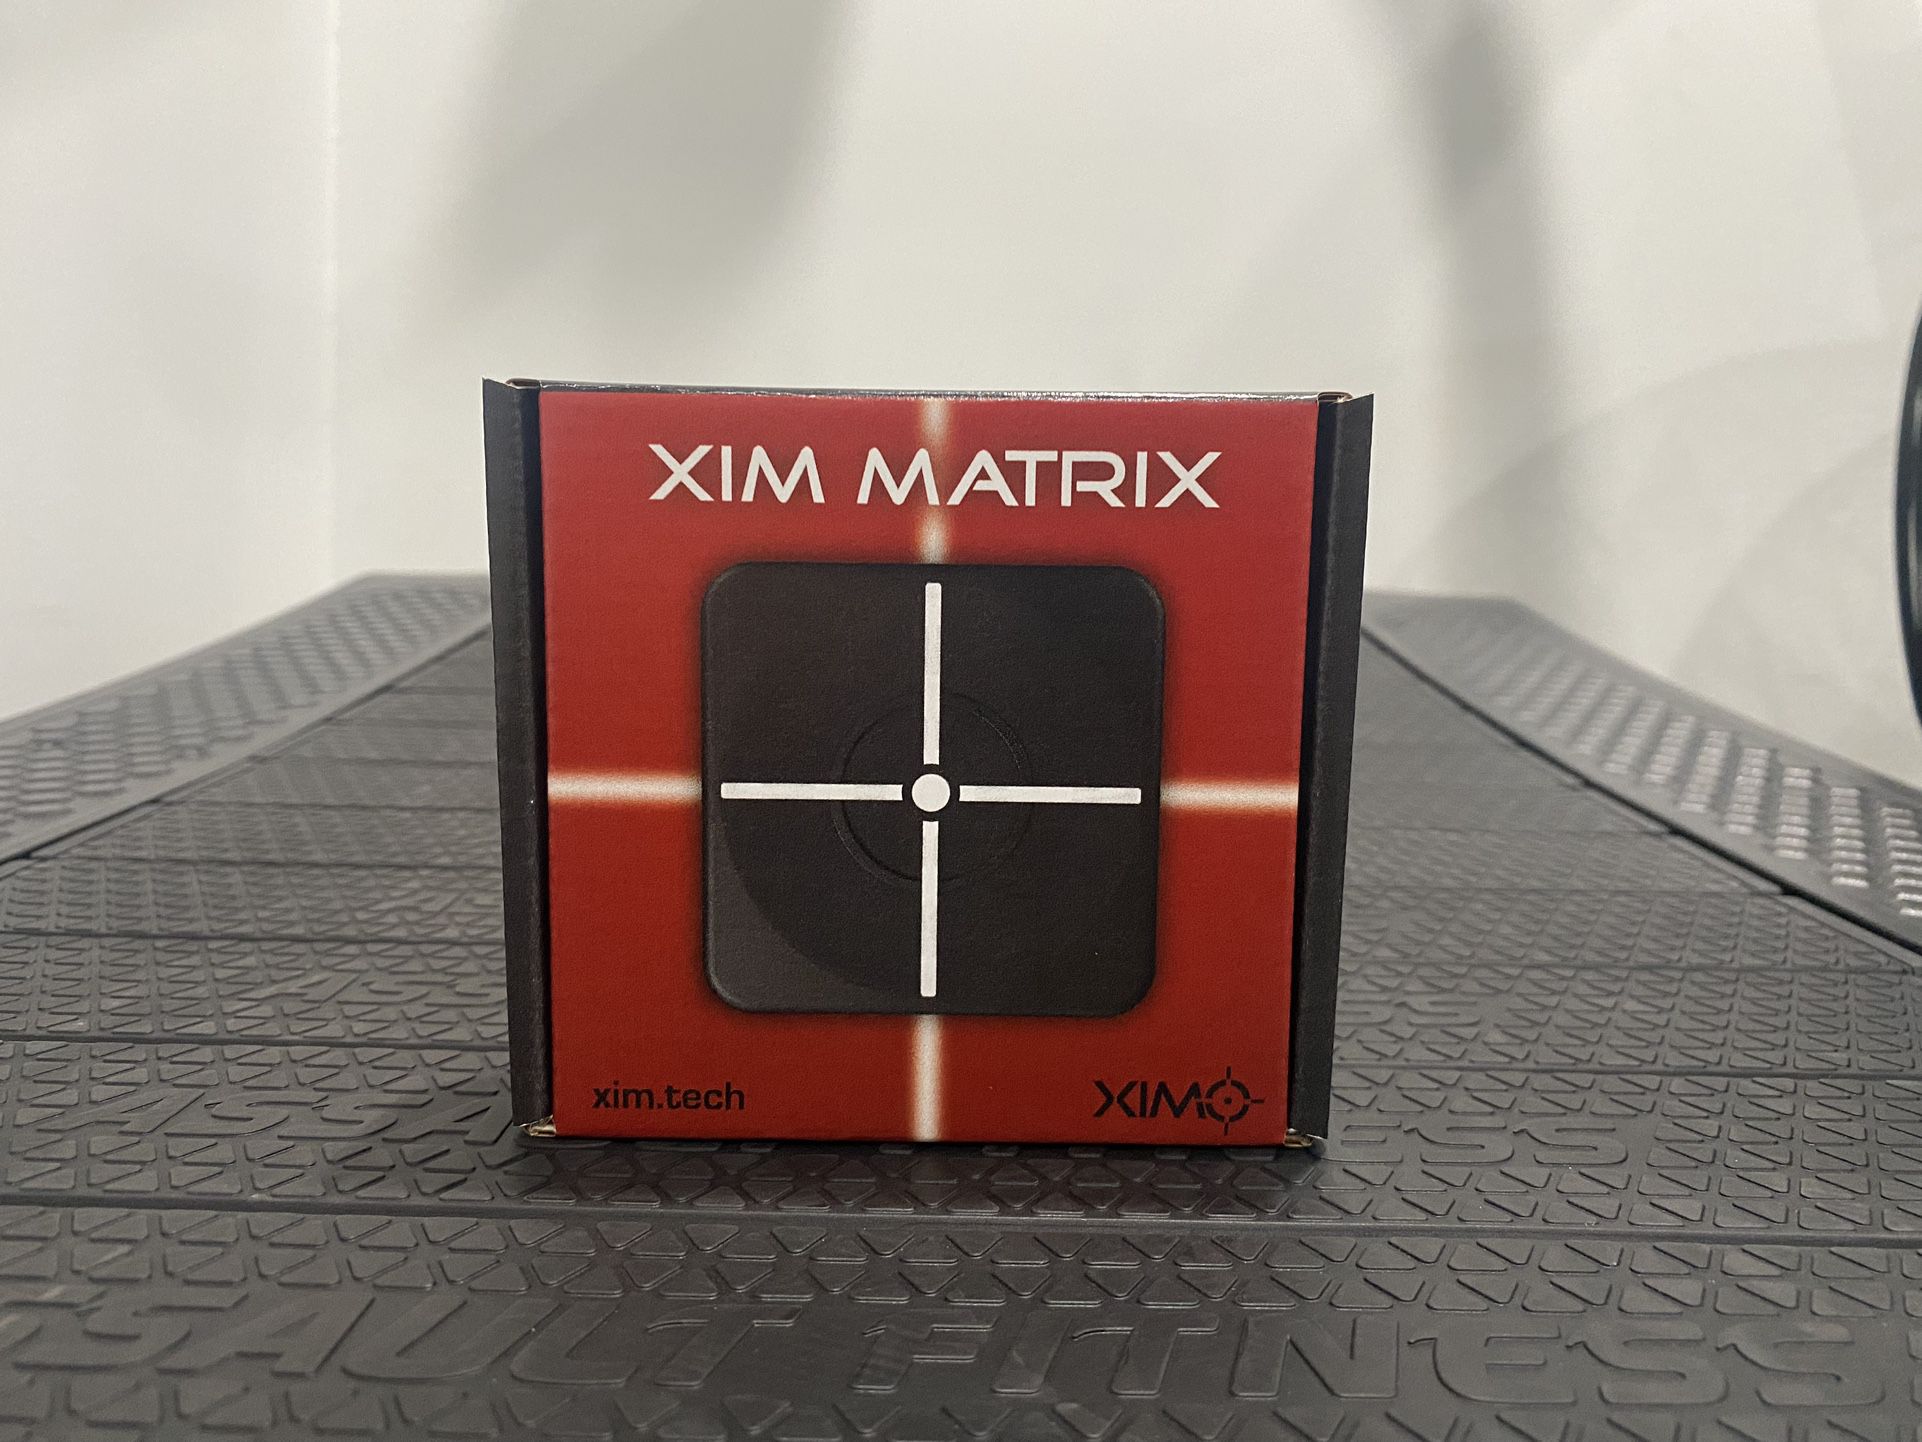 Xim Matrix for Sale in Pembroke Pines, FL OfferUp